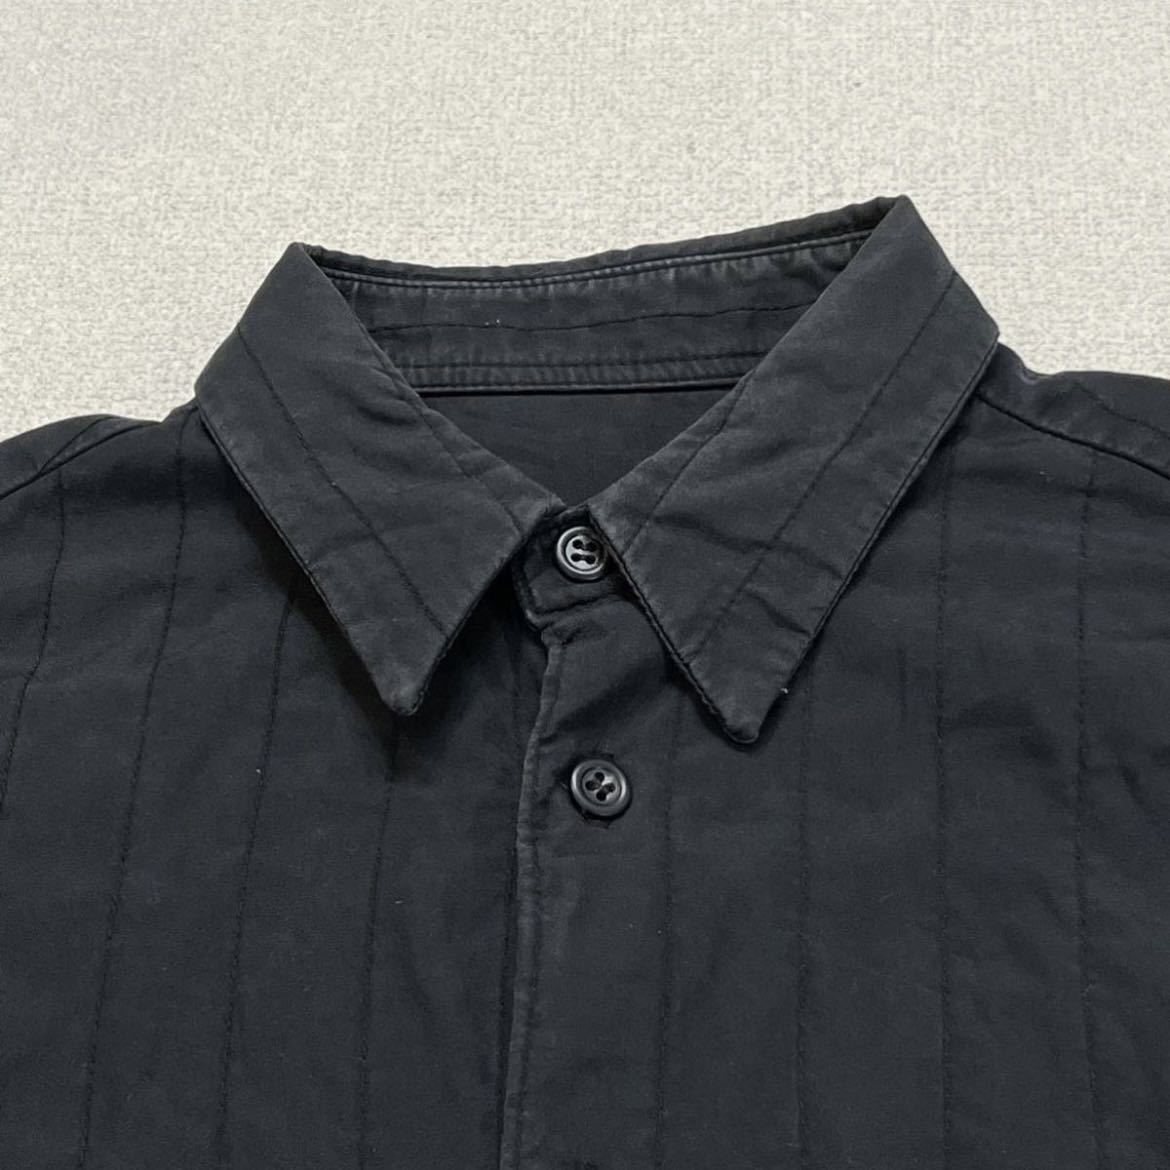 【 KENZO HOMME 】 90s キルティング シャツ ジャケット ブラック 2 M shirt jacket ストライプ ケンゾー_画像4